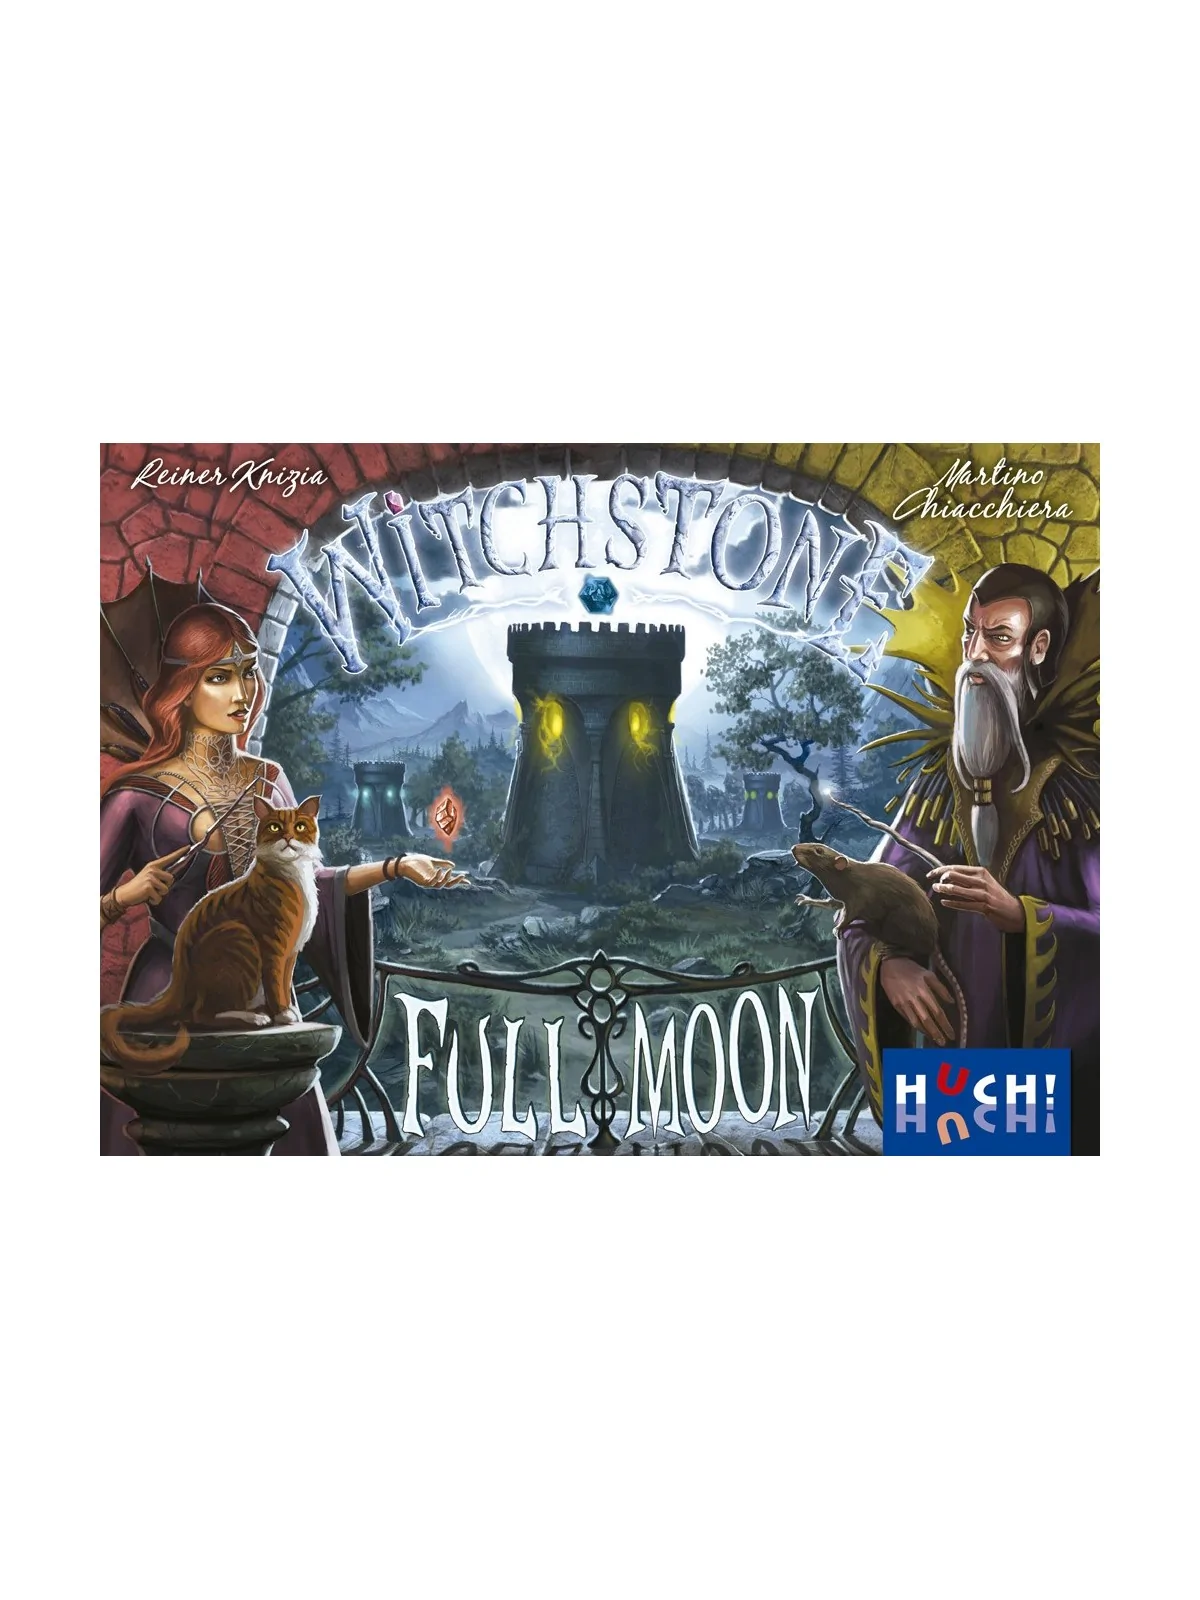 Comprar Witchstone: Full Moon [PREVENTA] barato al mejor precio 16,20 